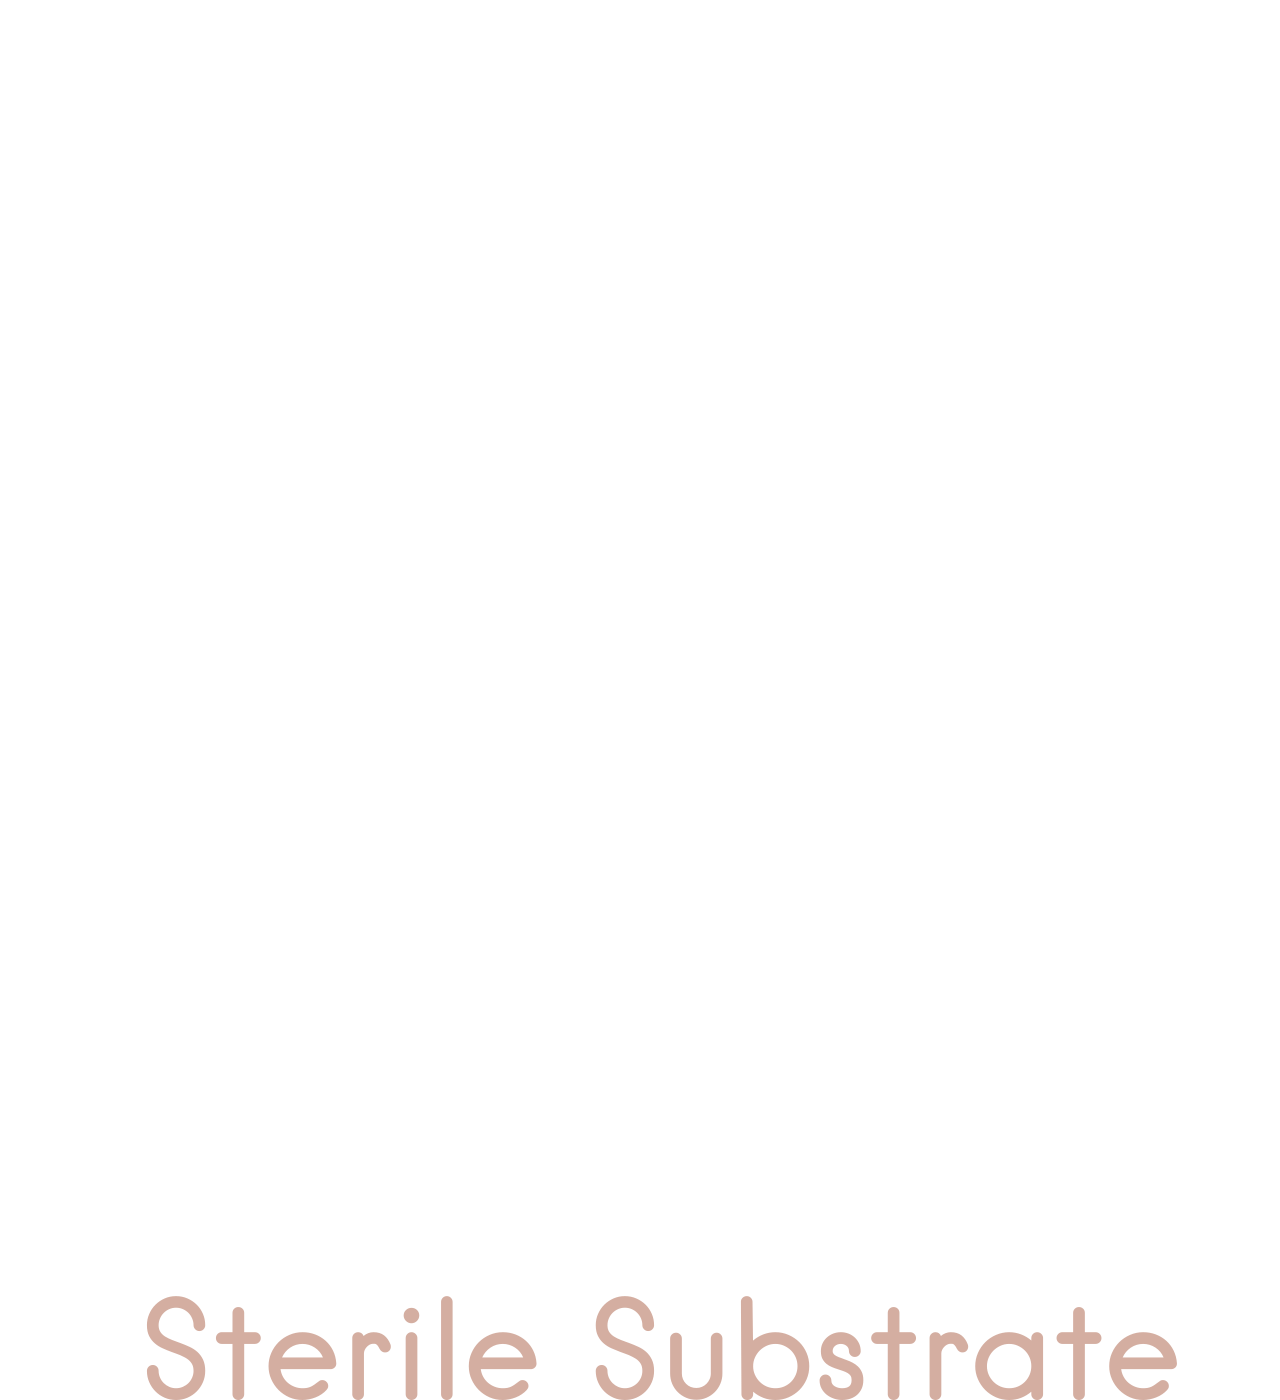 Saylor's's web page